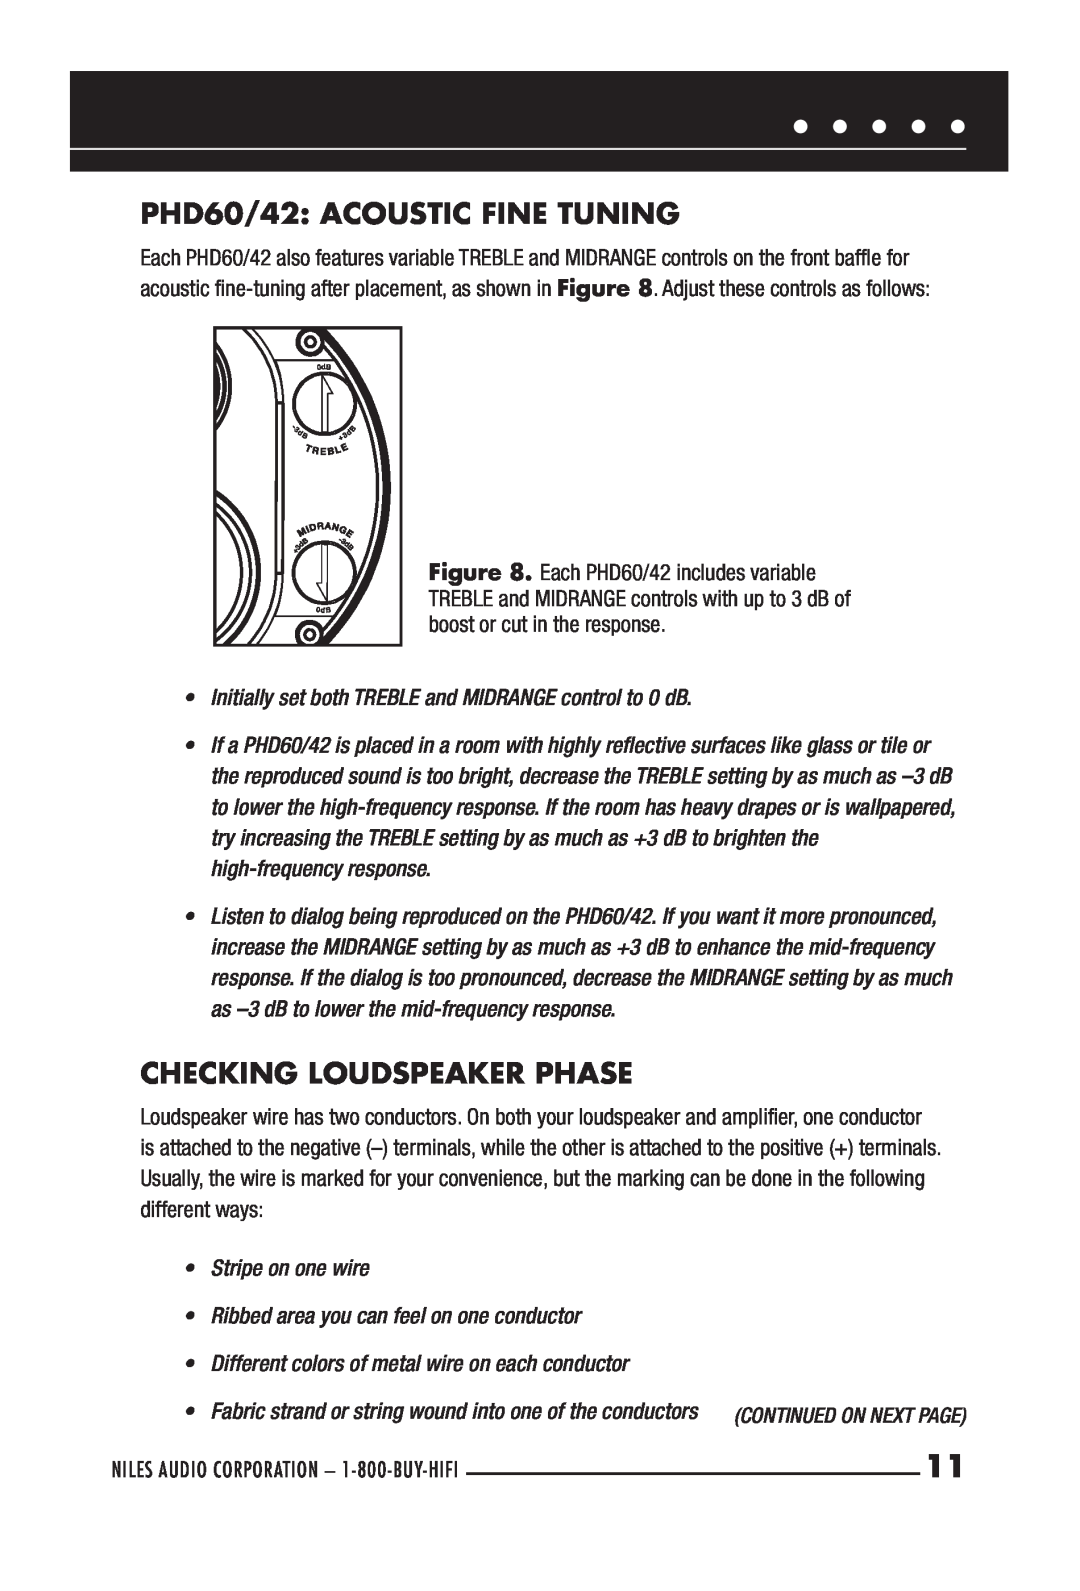 Niles Audio PHD30, PHD42 manual PHD60/42 ACOUSTIC FINE TUNING, Checking Loudspeaker Phase 